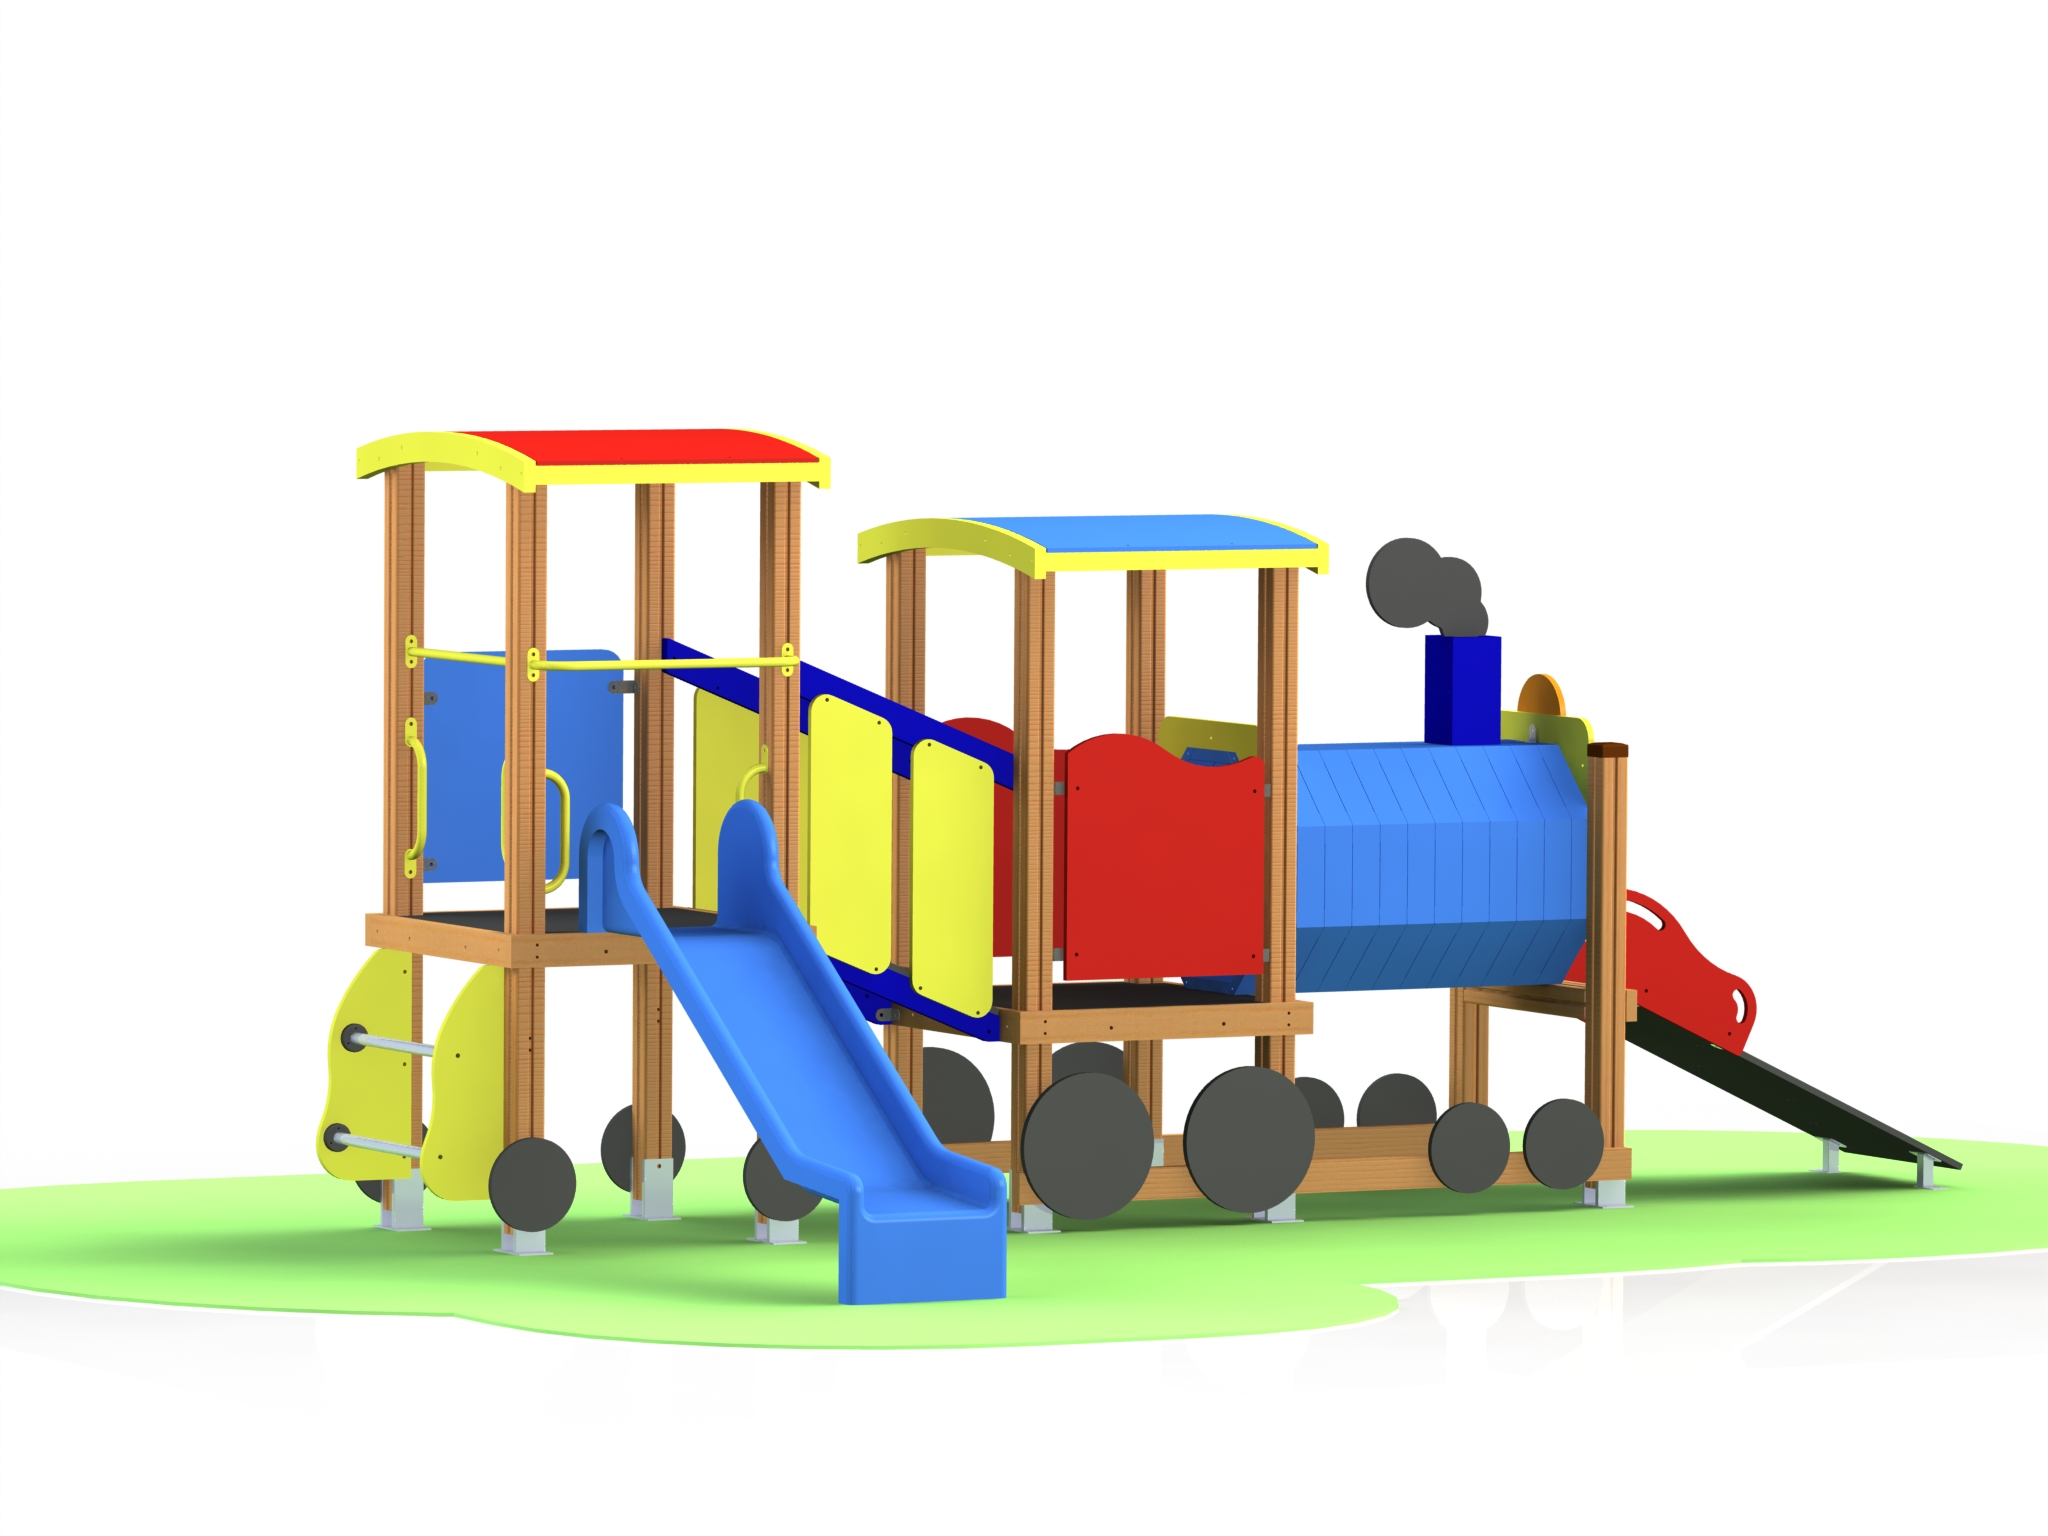 Combined playground equipment, model КД57 – “Puff-Puff”